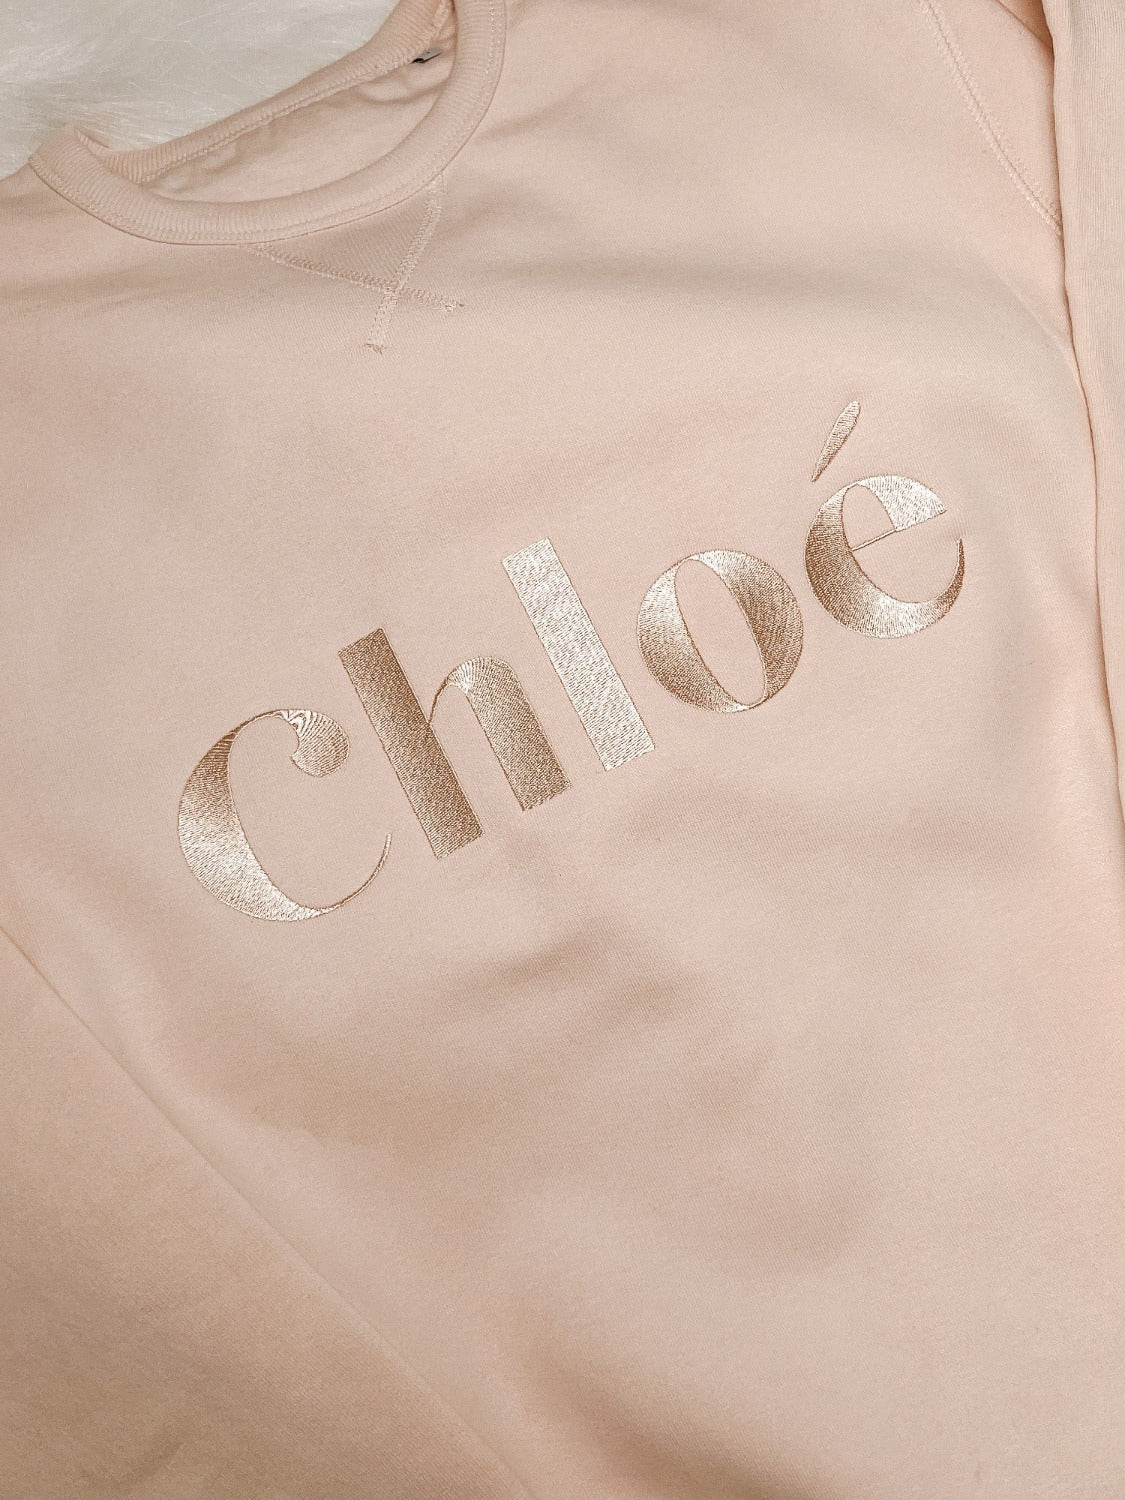 Clo Embroidered Women's Sweatshirt - UK S pink